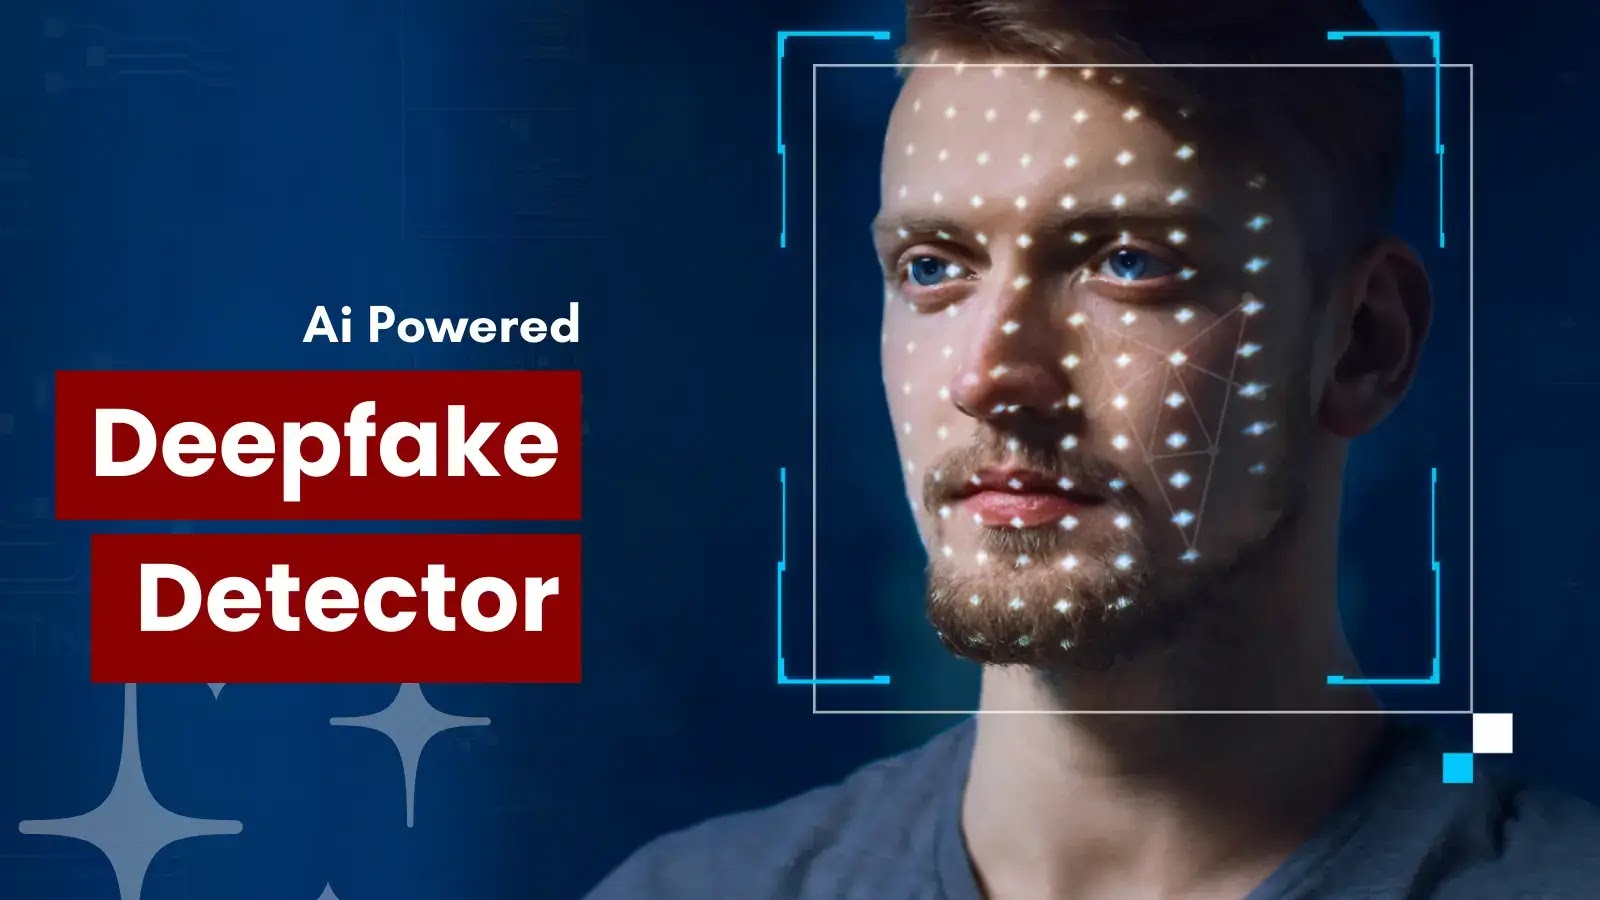 AI Powered Deepfake Detector to Combact Deepfakes Threats